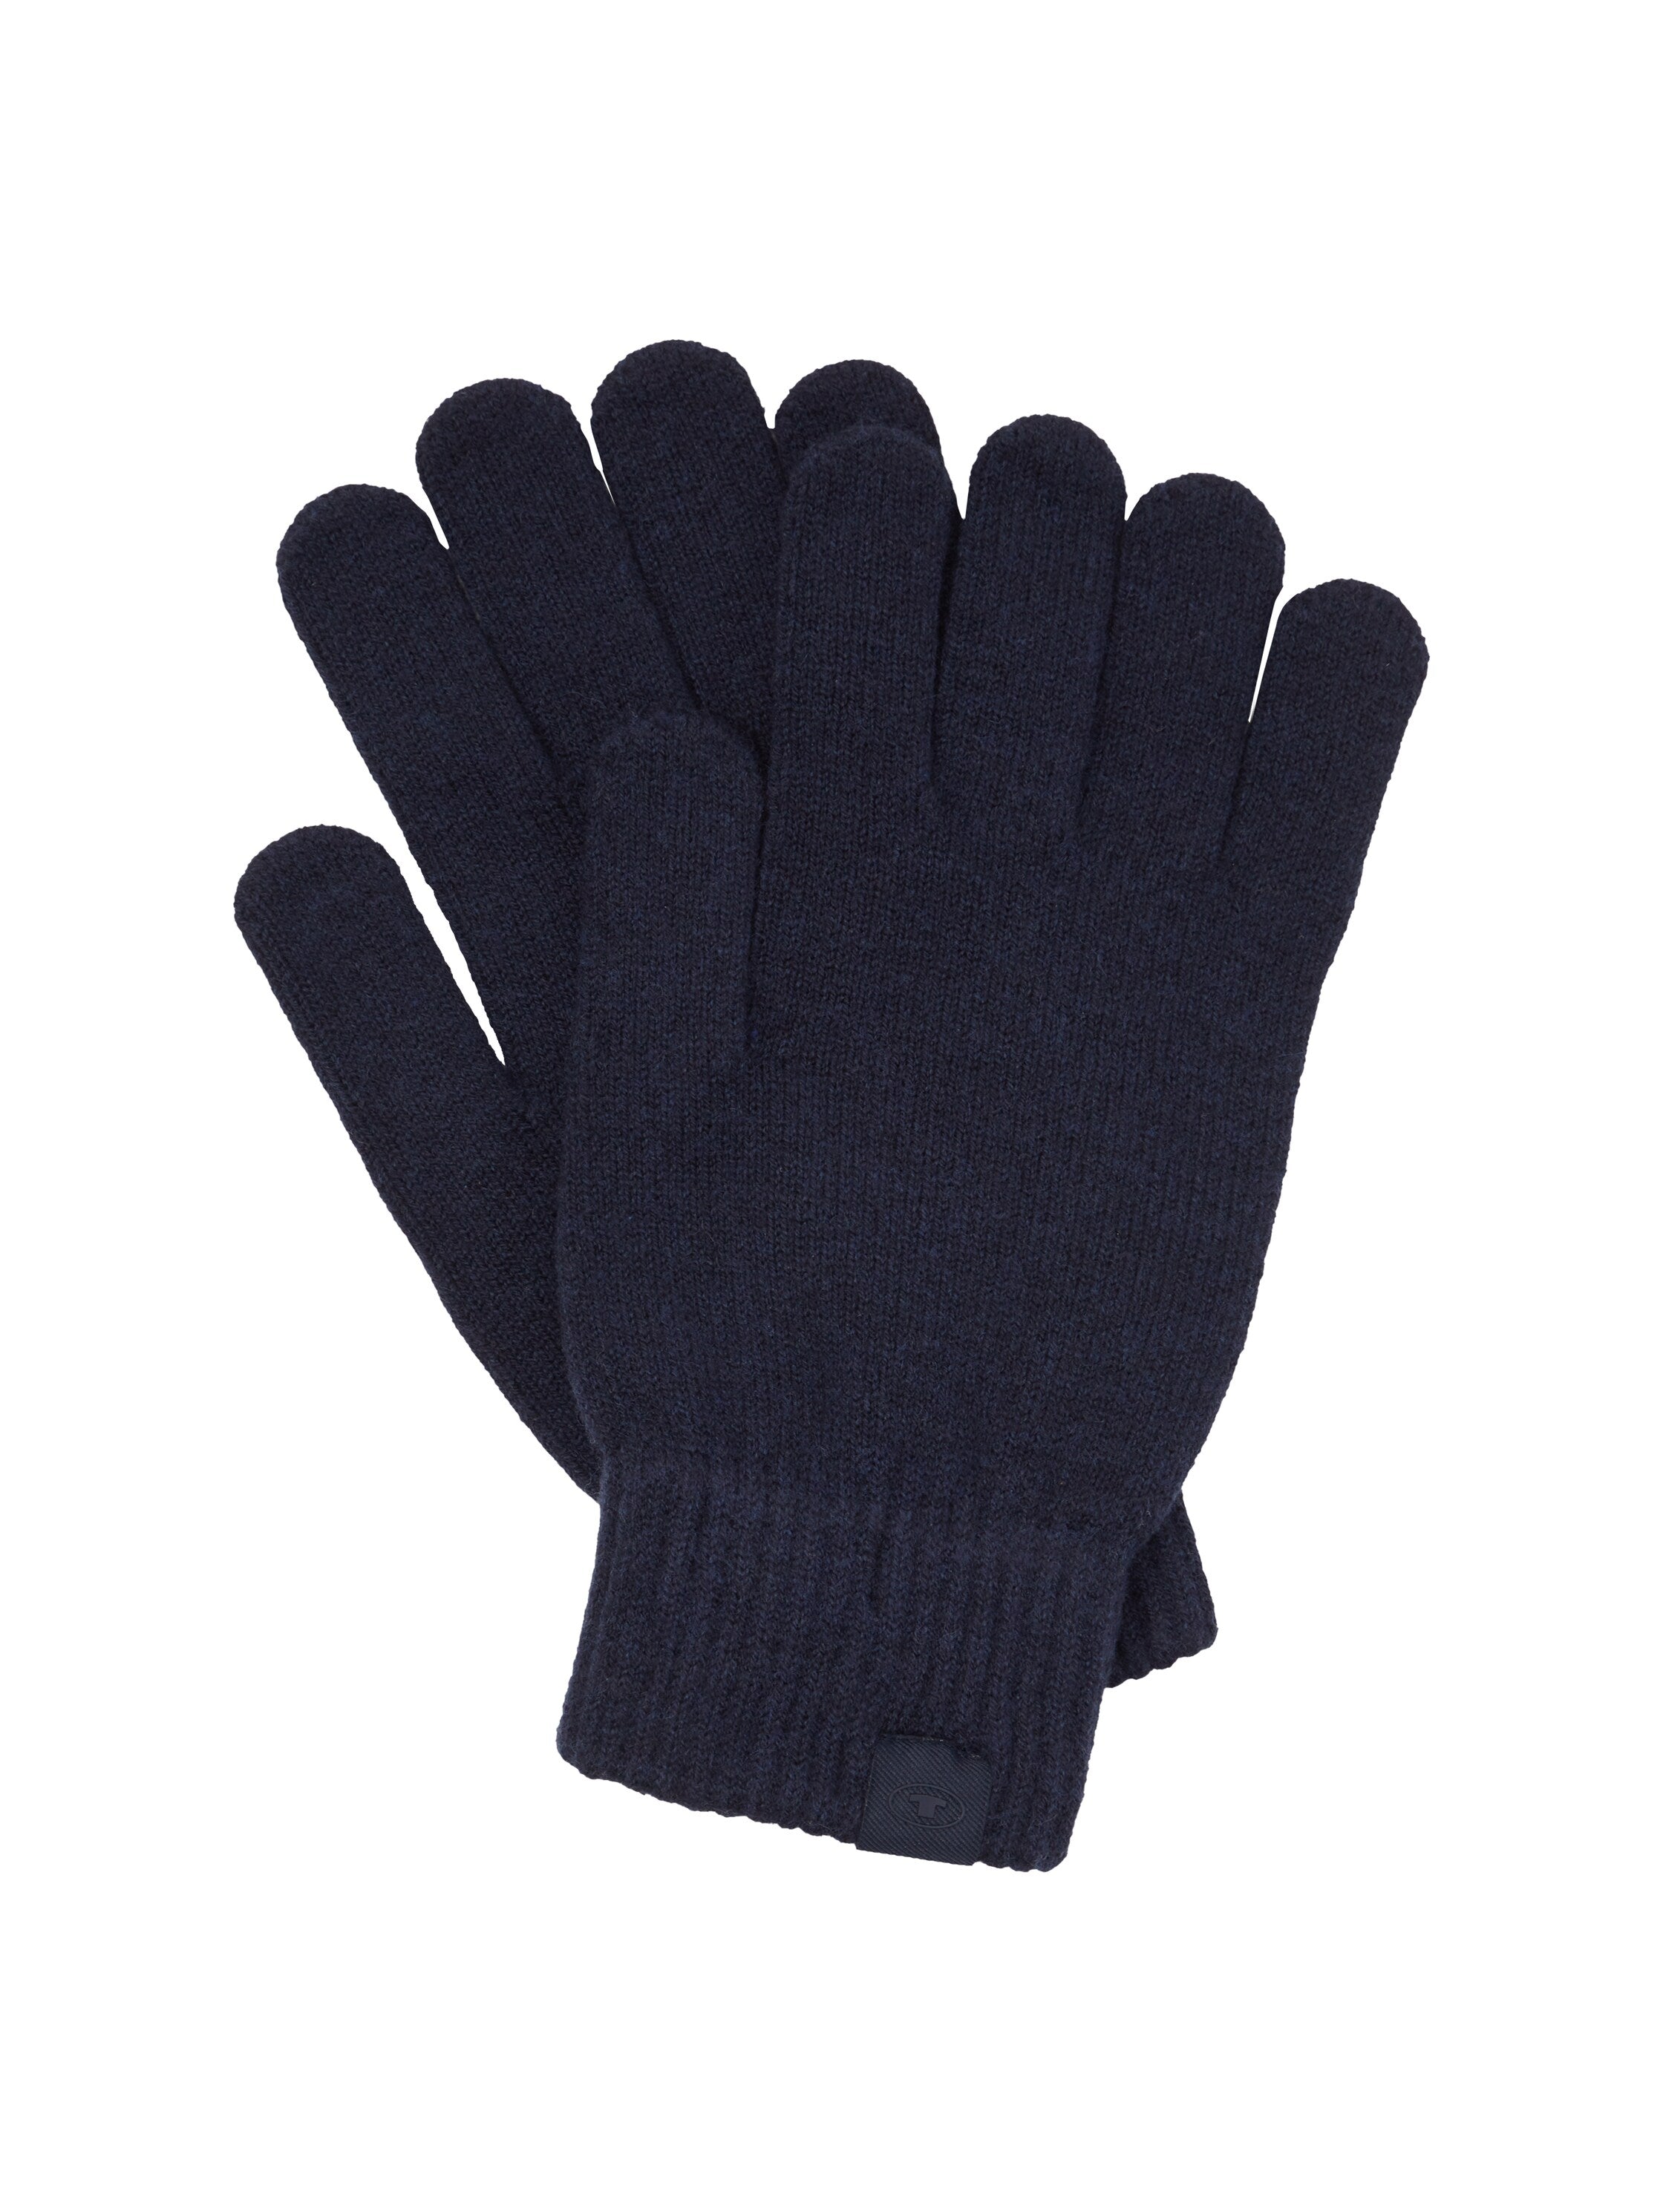 Tom Tailor Winter Navy Gloves